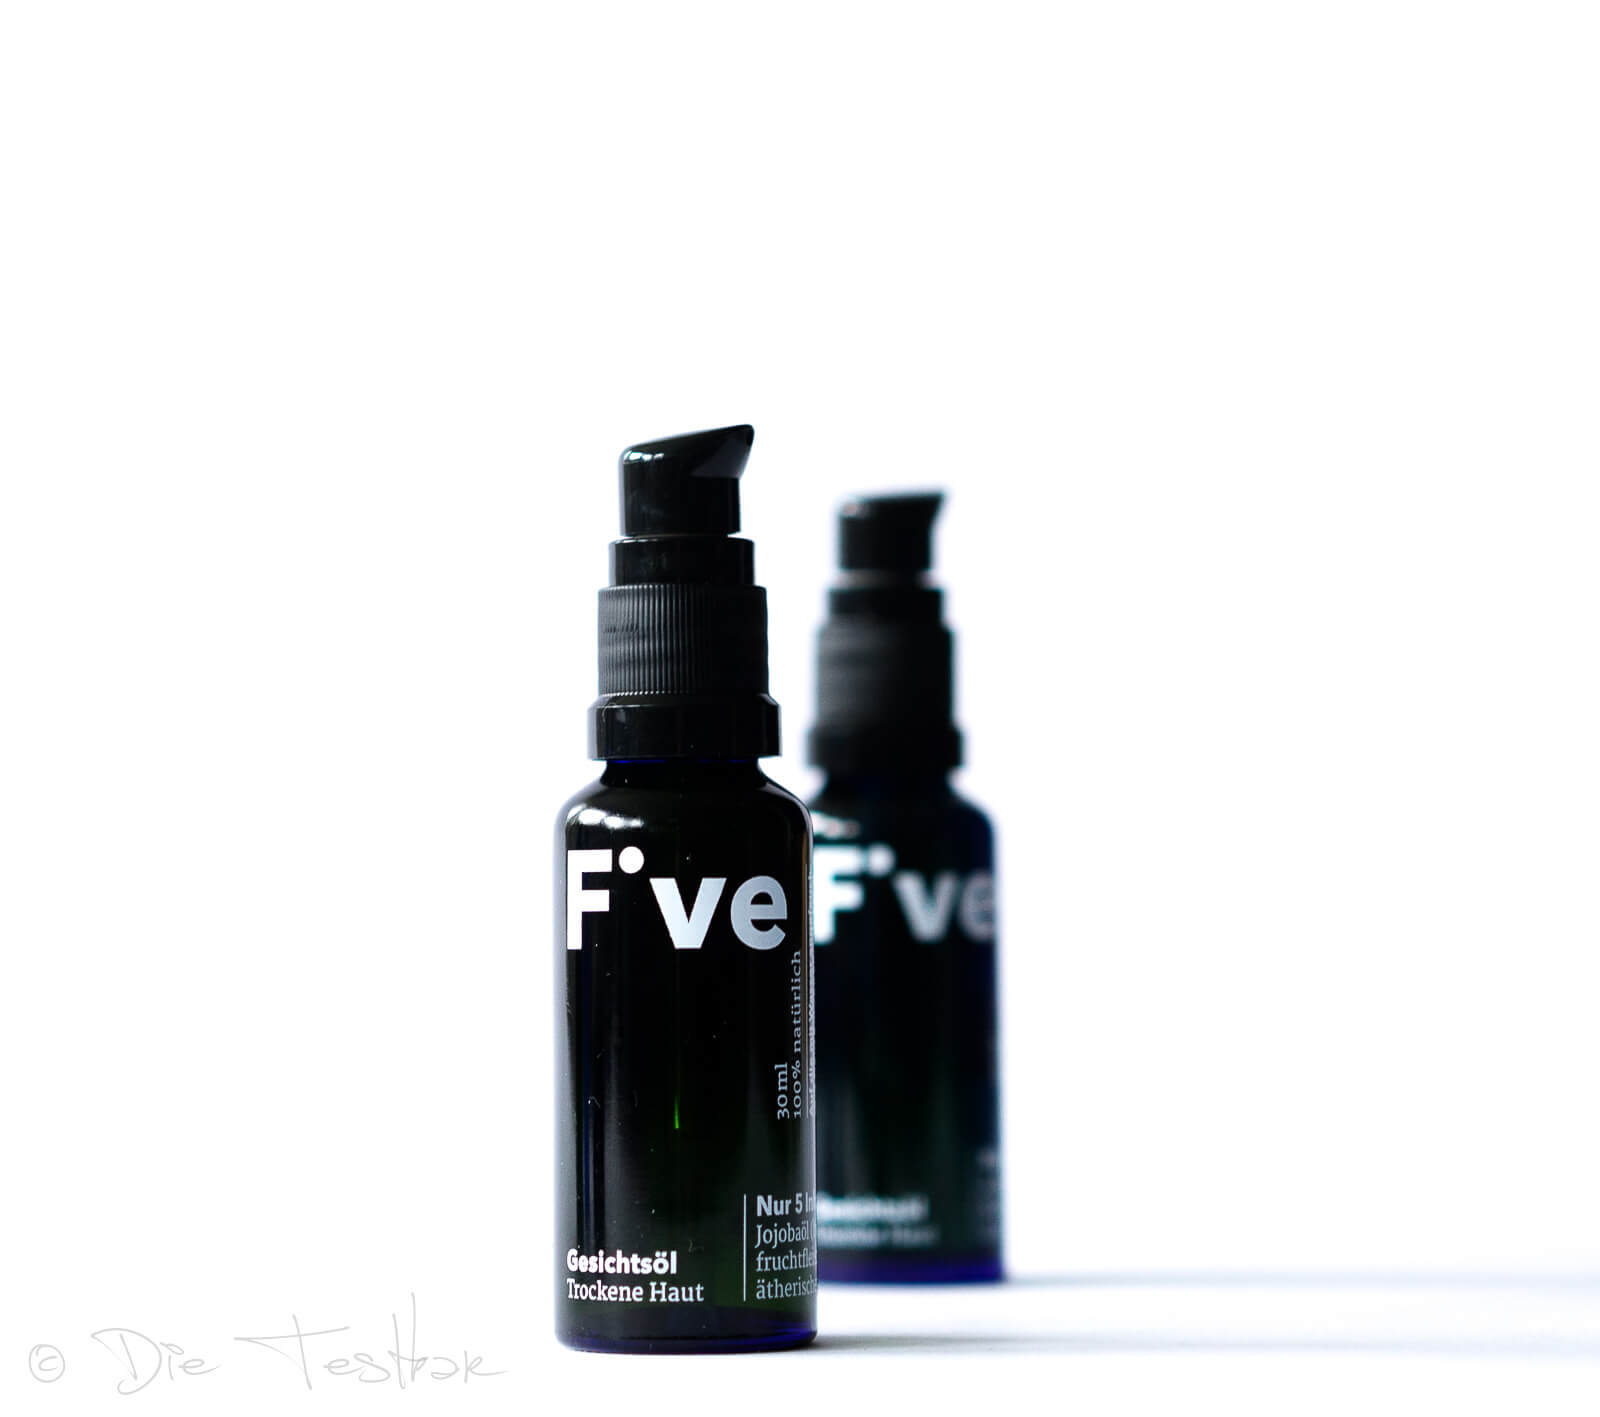 FIVE Gesichtsöl – Trockene Haut